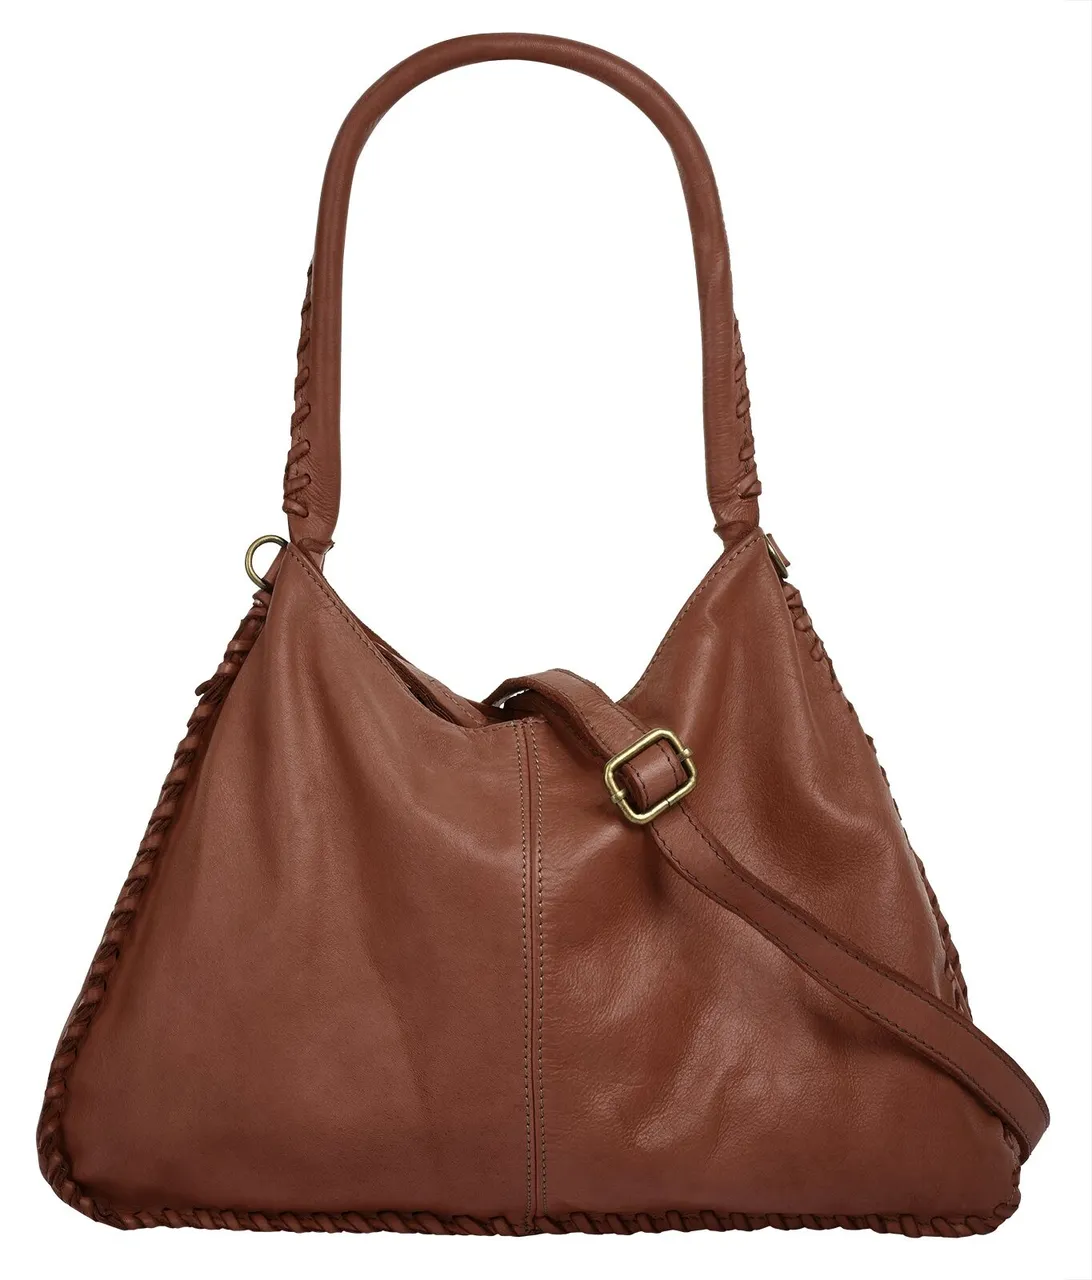 Shopper SAMANTHA LOOK Gr. B/H/T: 34 cm x 24 cm x 9 cm onesize, braun (cognac) Damen Taschen Handtaschen